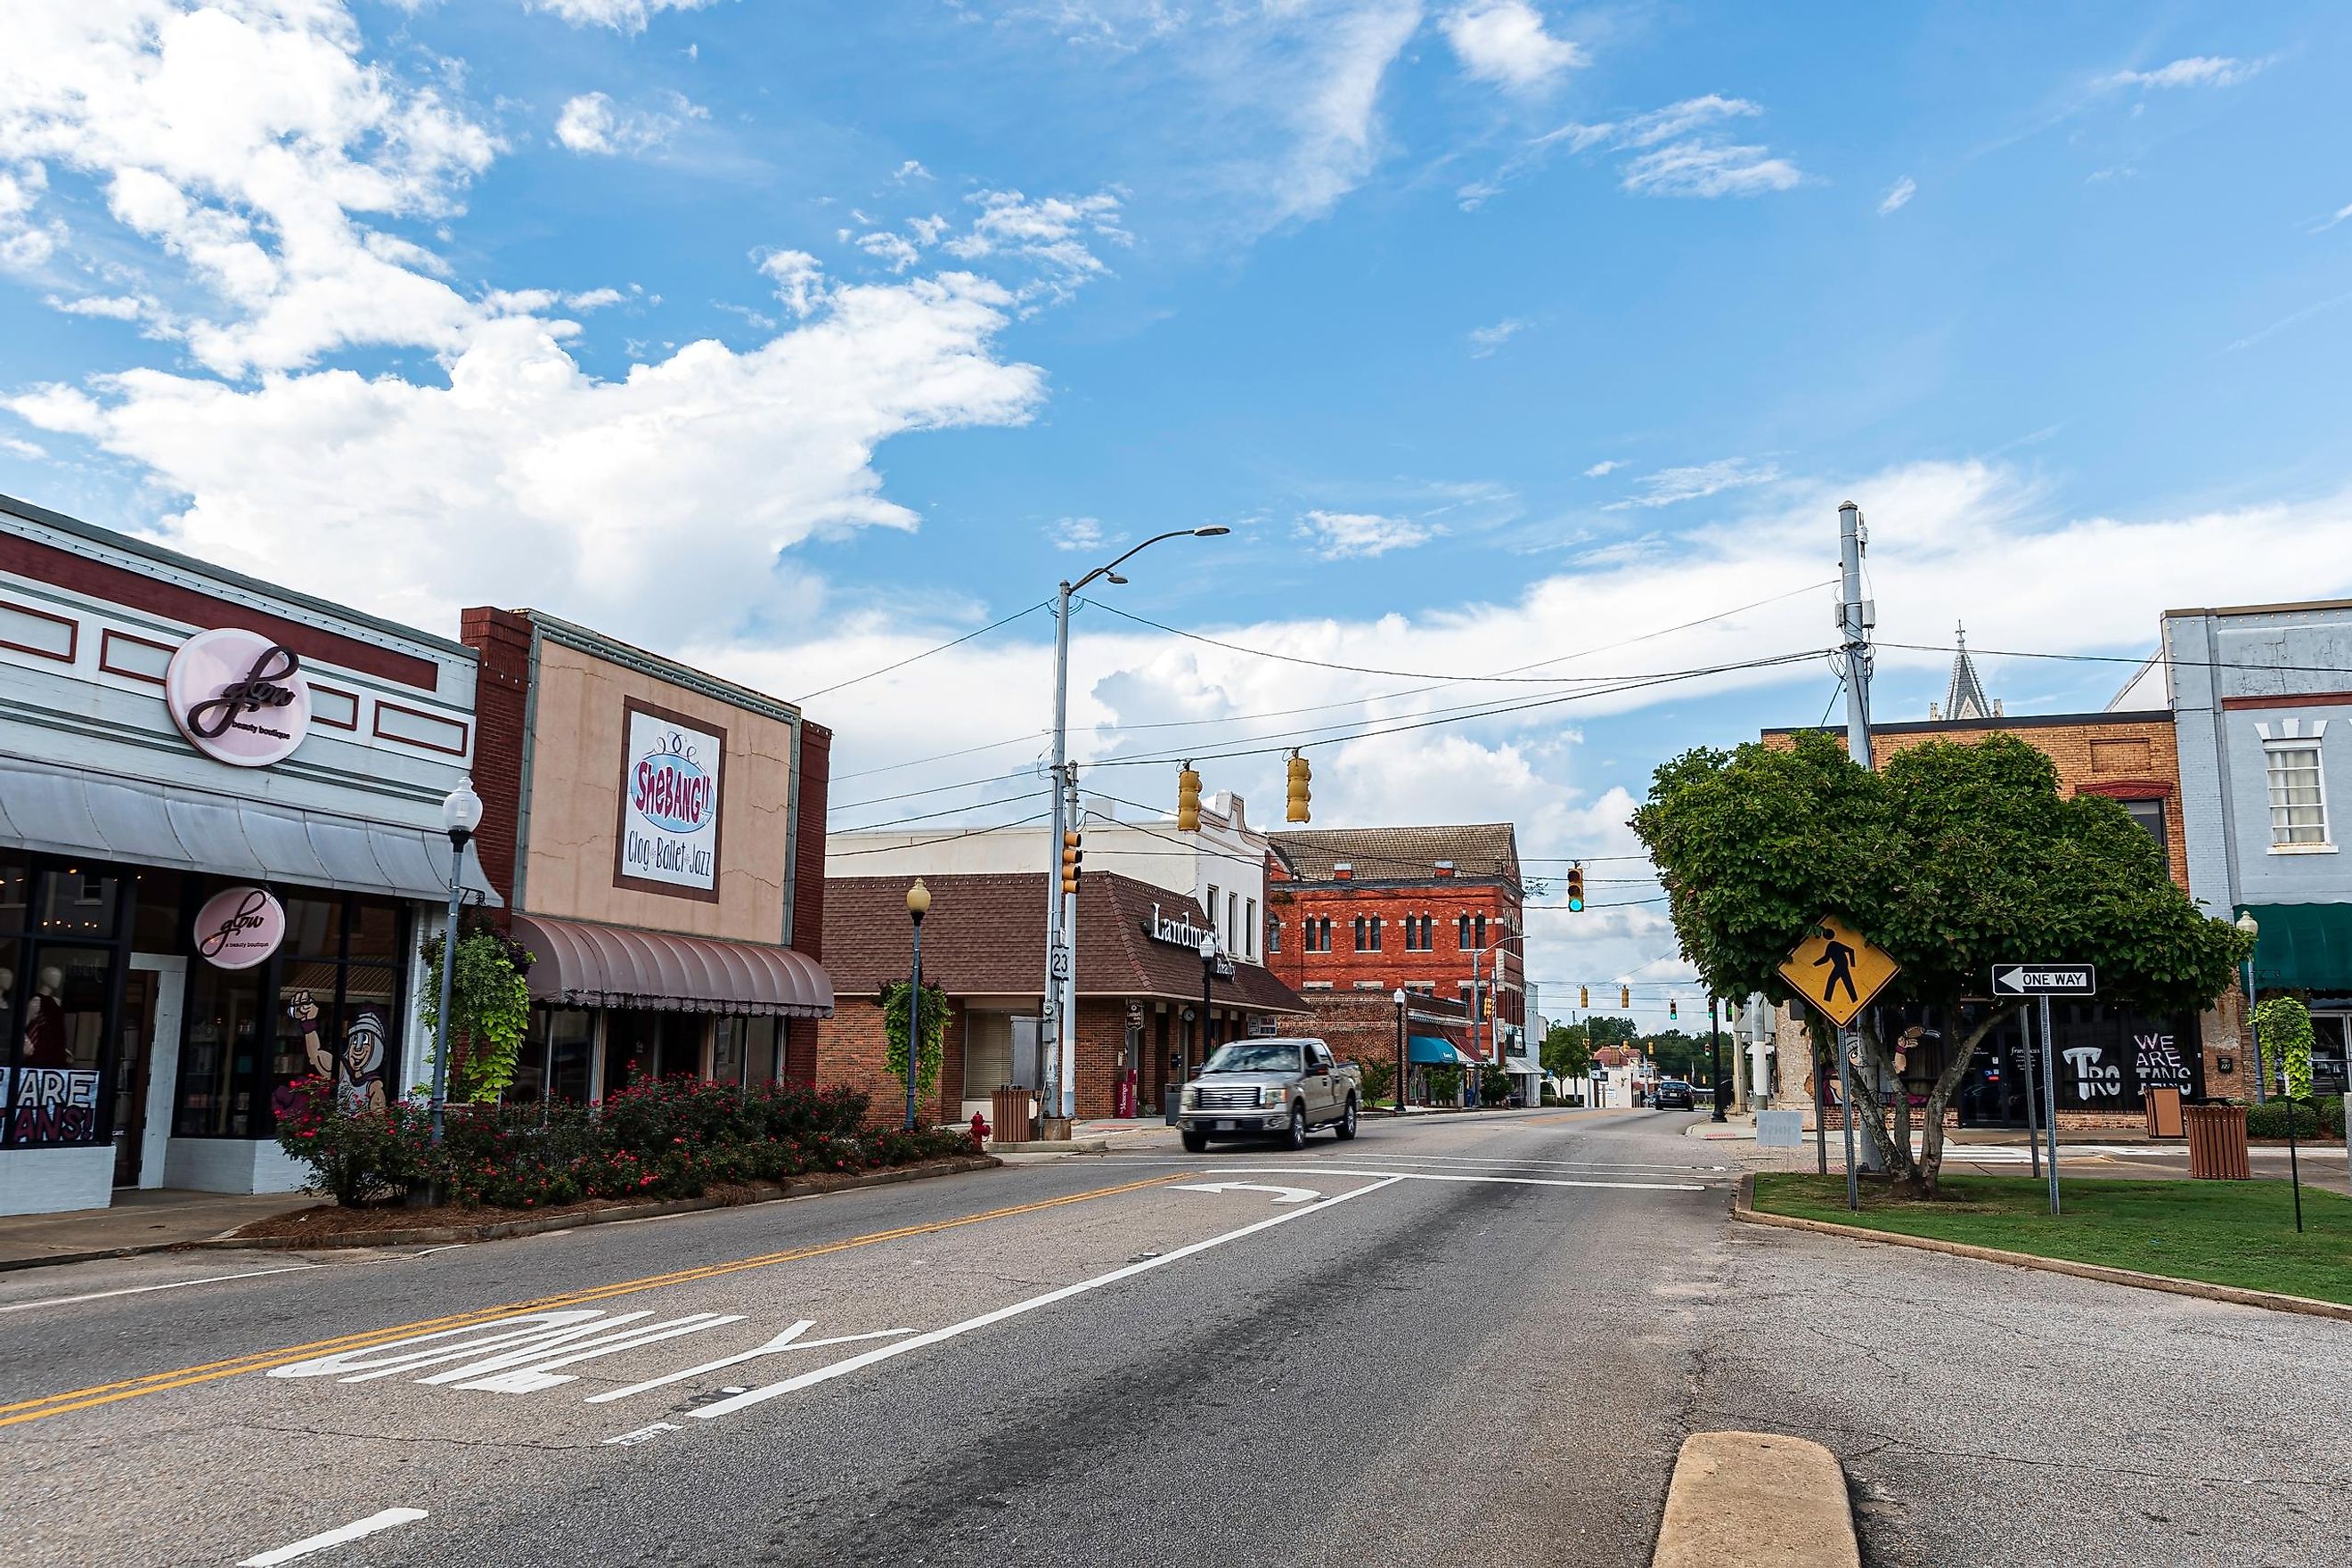 Eufaula, Alabama, USA - August 13, 2022: Main street in historic downtown